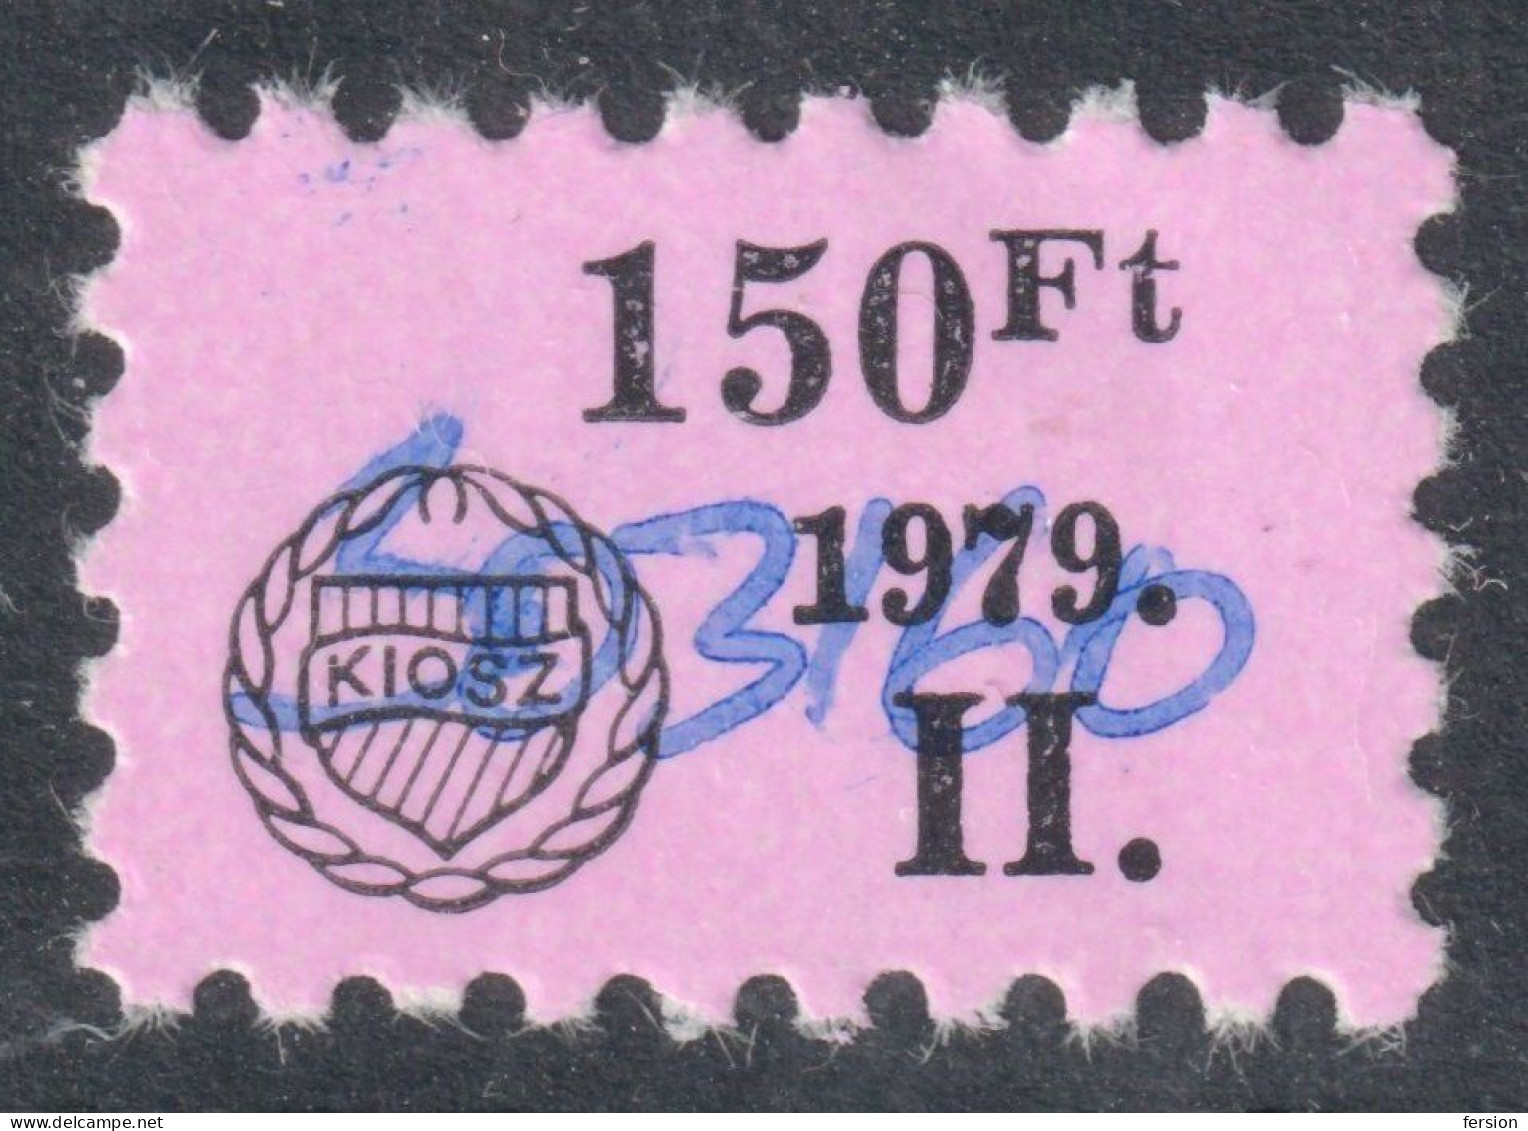 Hungarian Association Of Craftmen - Artisan KIOSZ / Charity Aid Member Label / Vignette / Cinderella - Used 1979 HUNGARY - Servizio